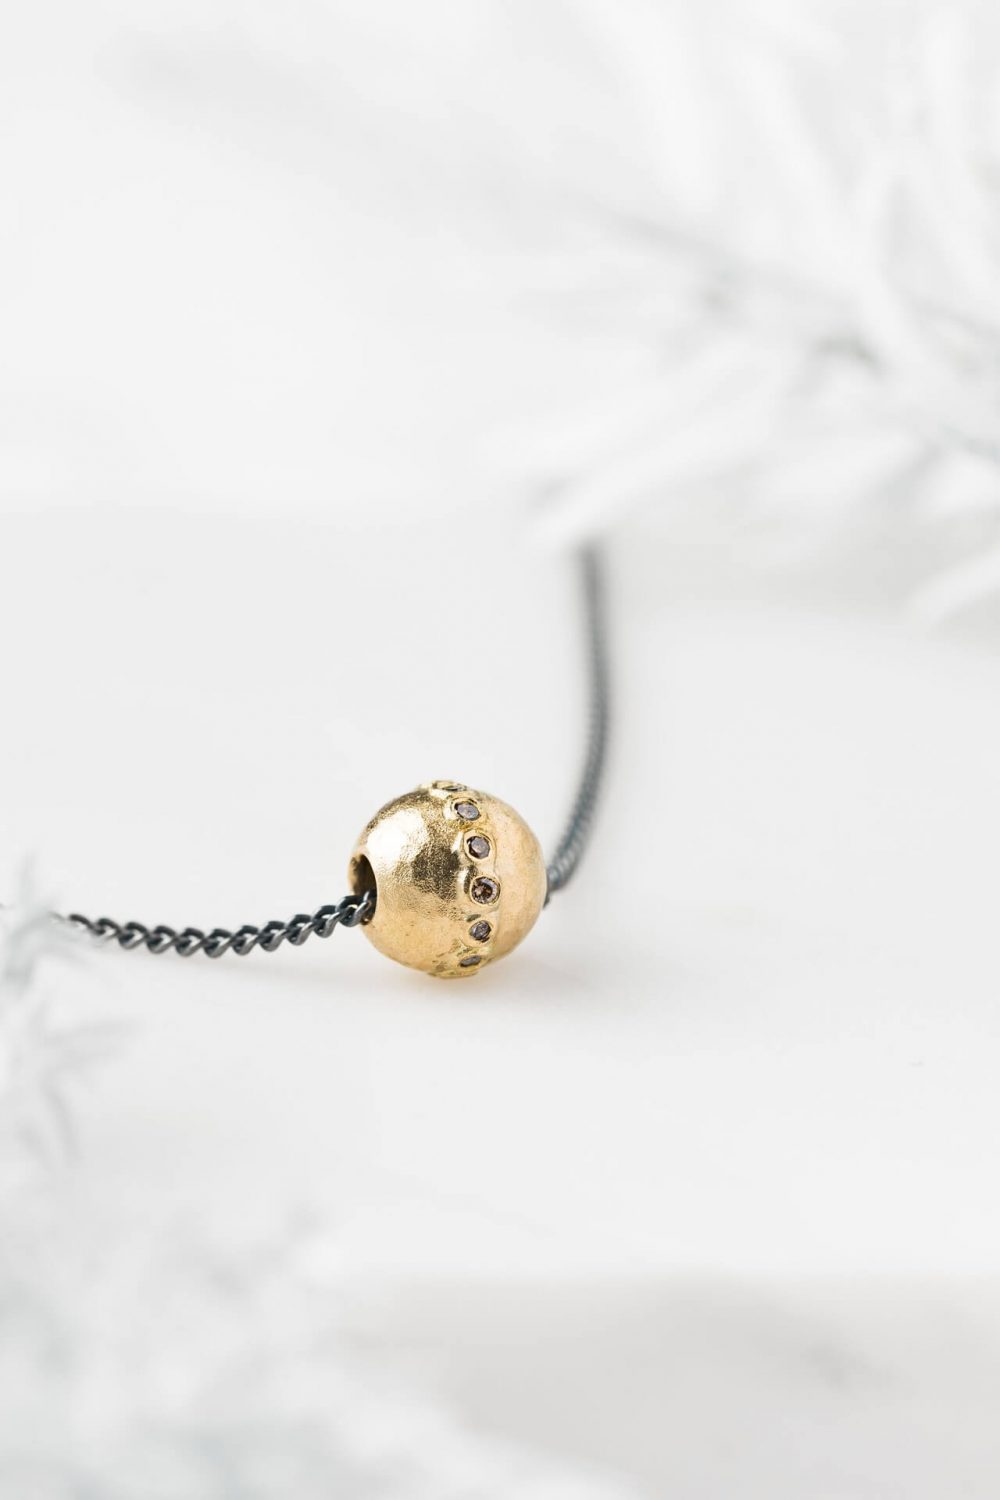 Diamond Eternity Necklace Handmade By Contemporary Jewellery Designer Jacks Turner.